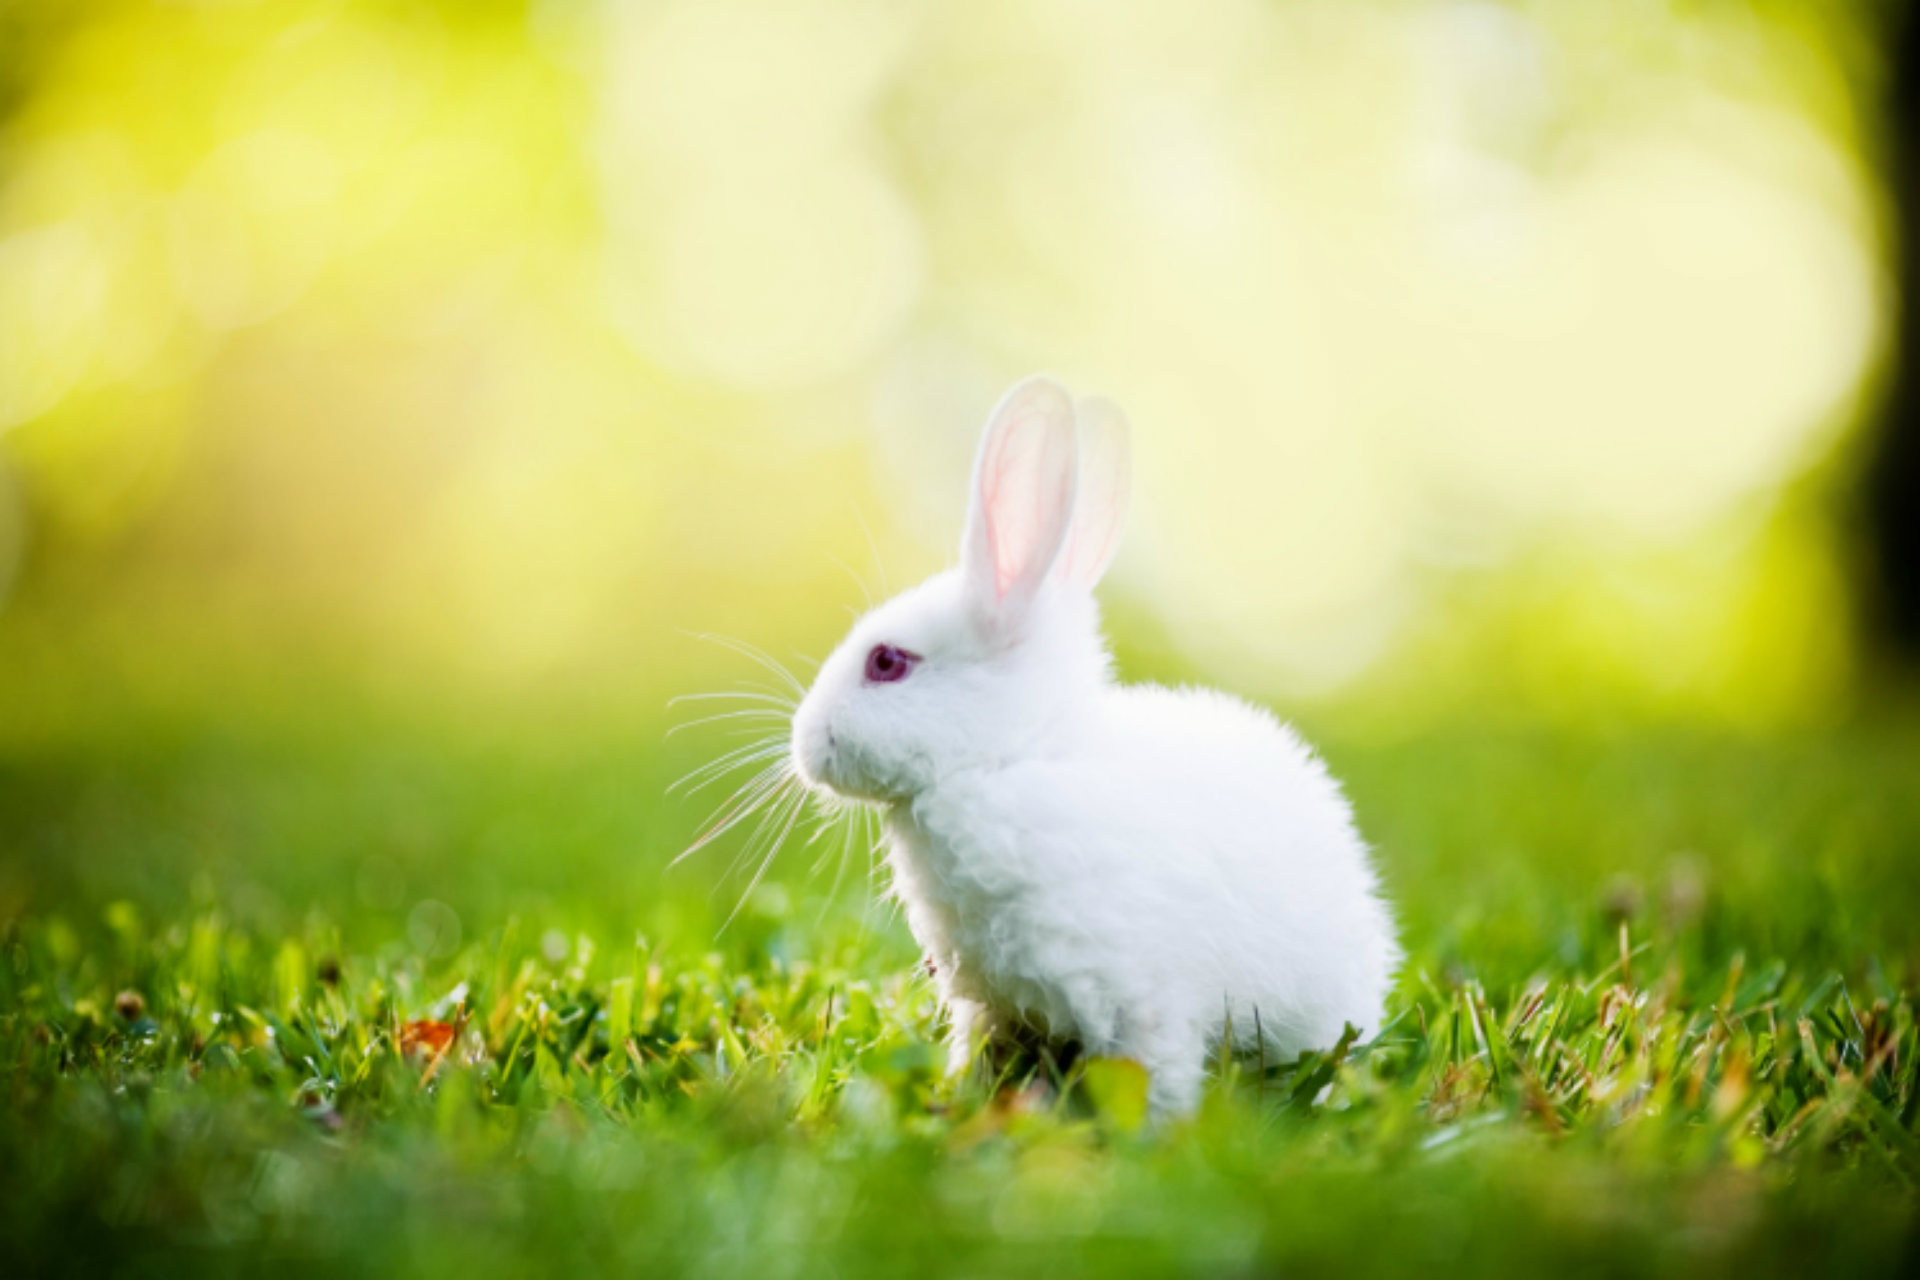 photos of bunny